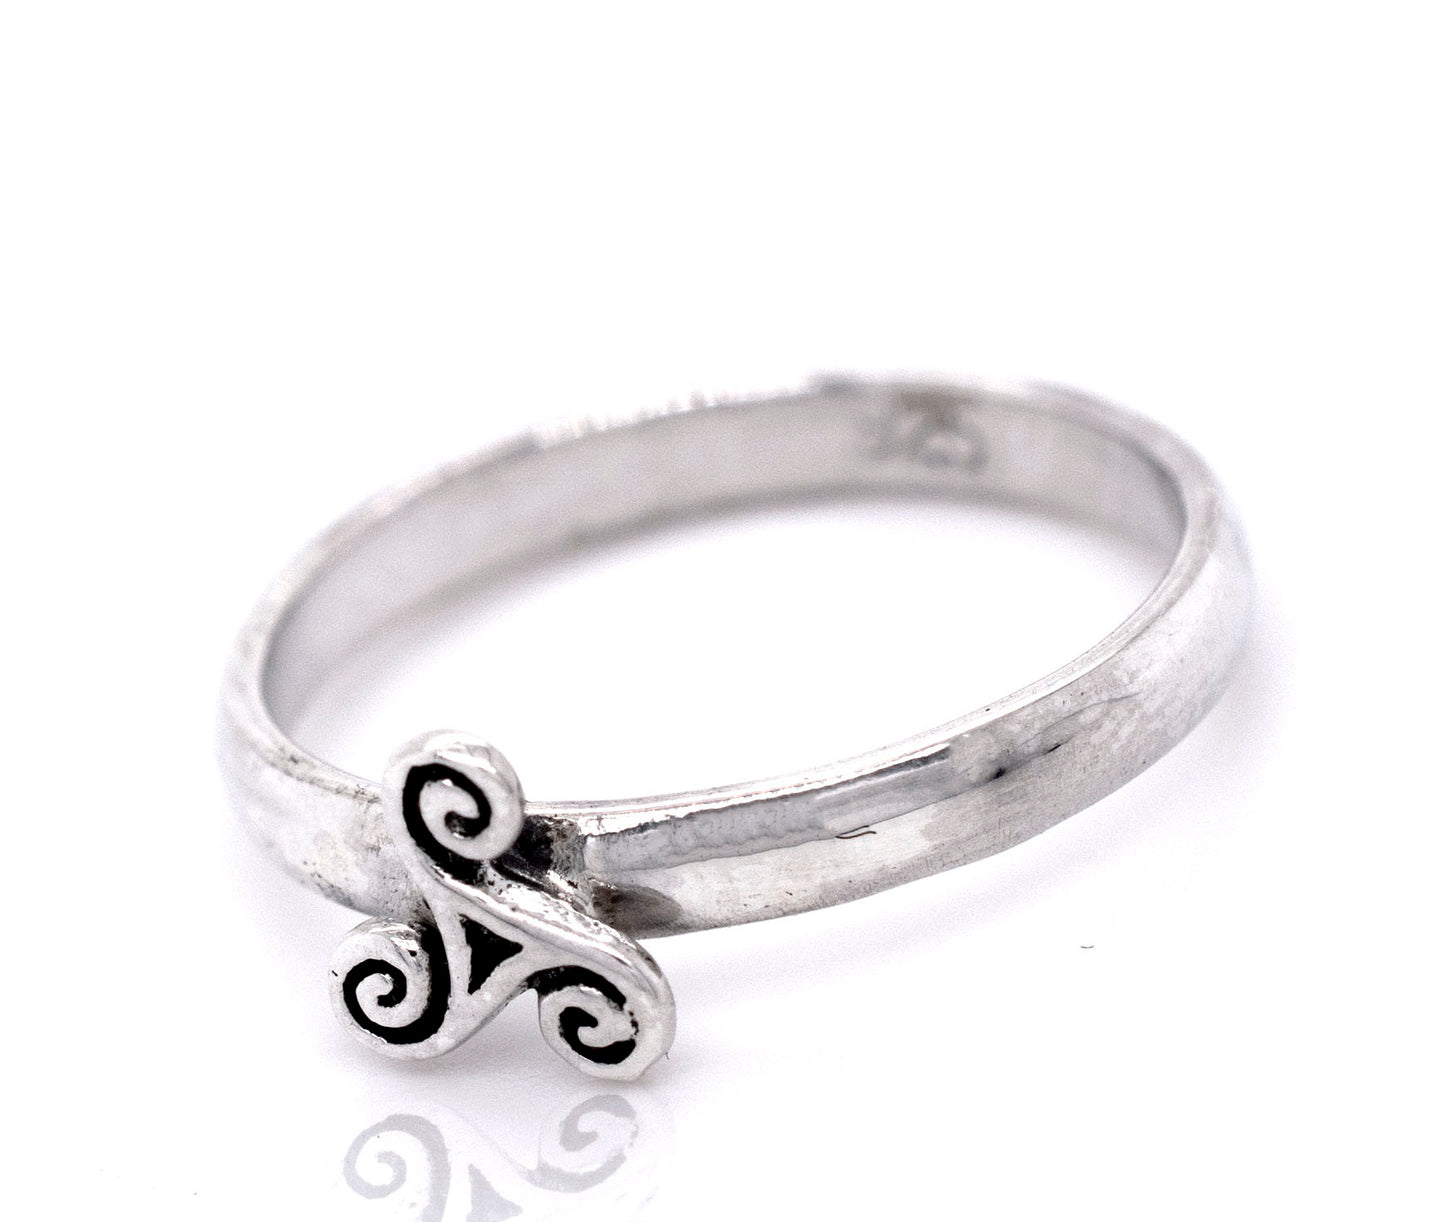 An elegant Dainty Triskelion Ring with a mesmerizing swirl design.